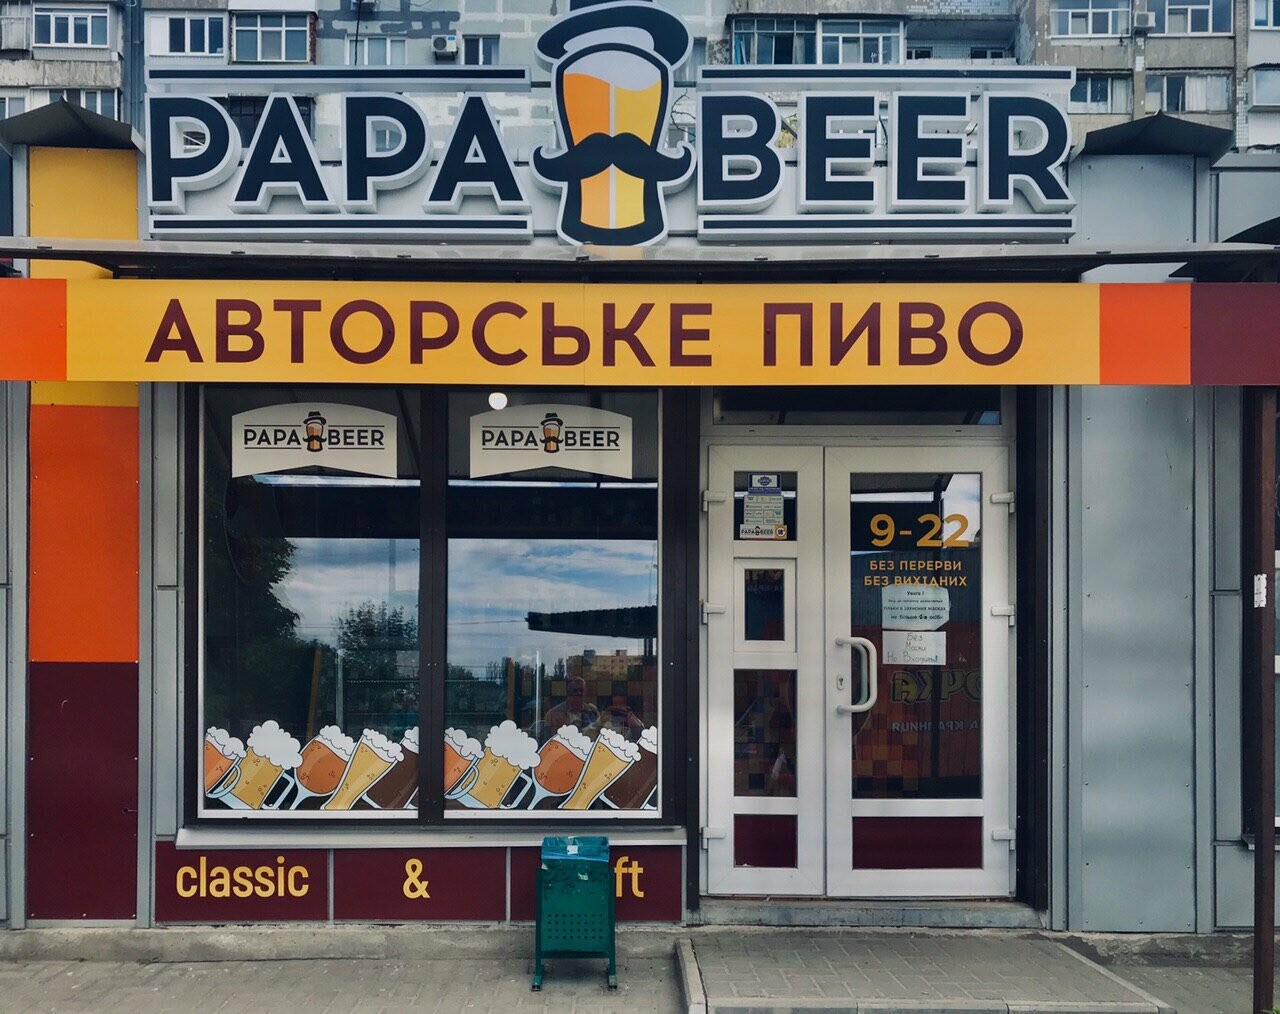 Papas and beer flashing